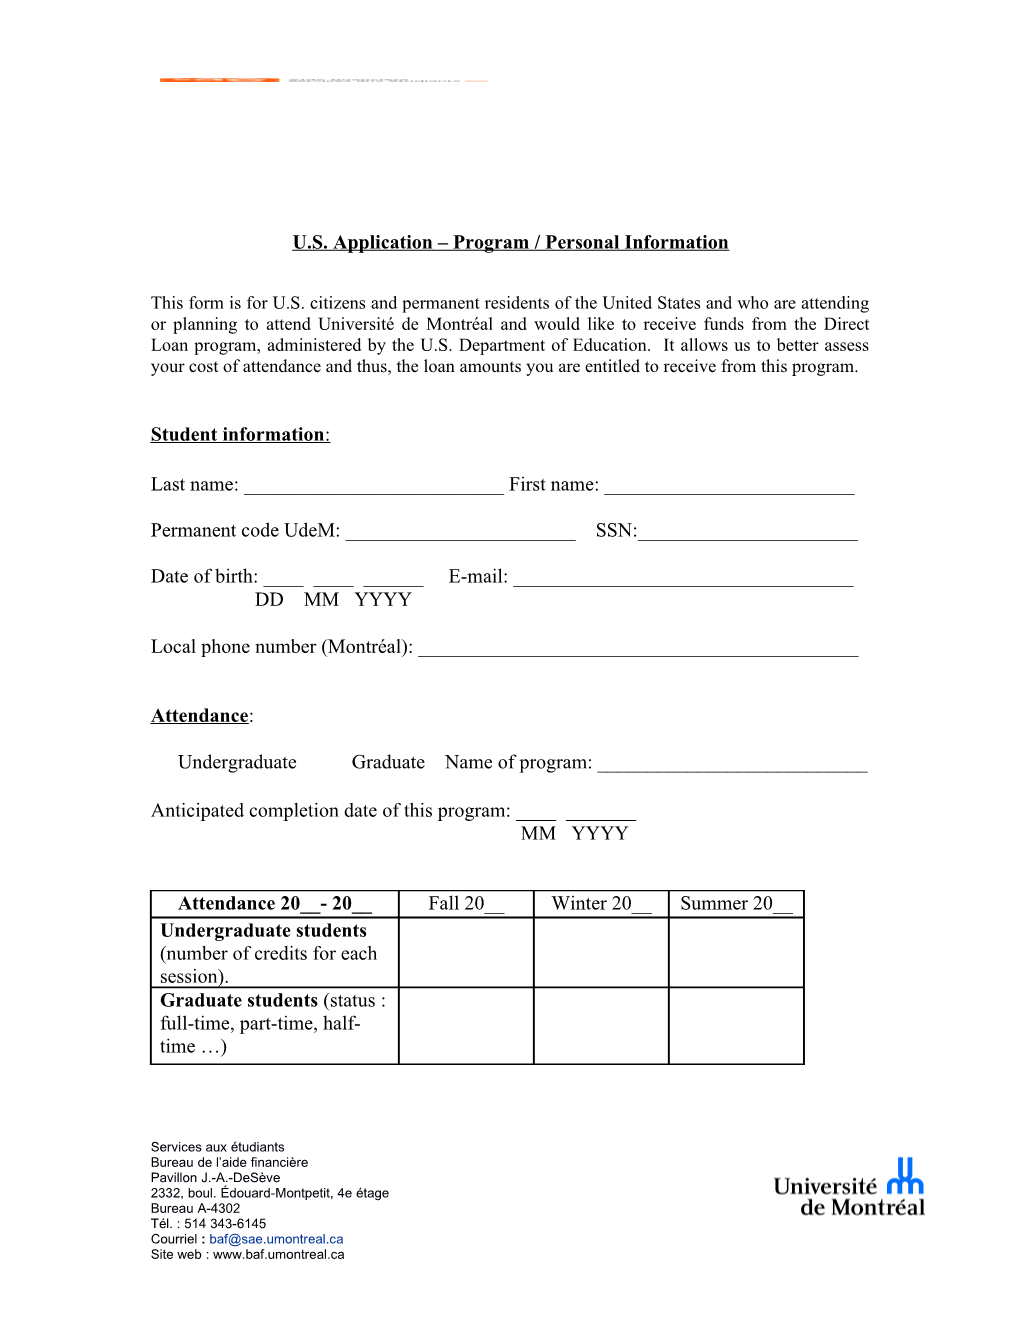 U.S. Application Program / Personal Information